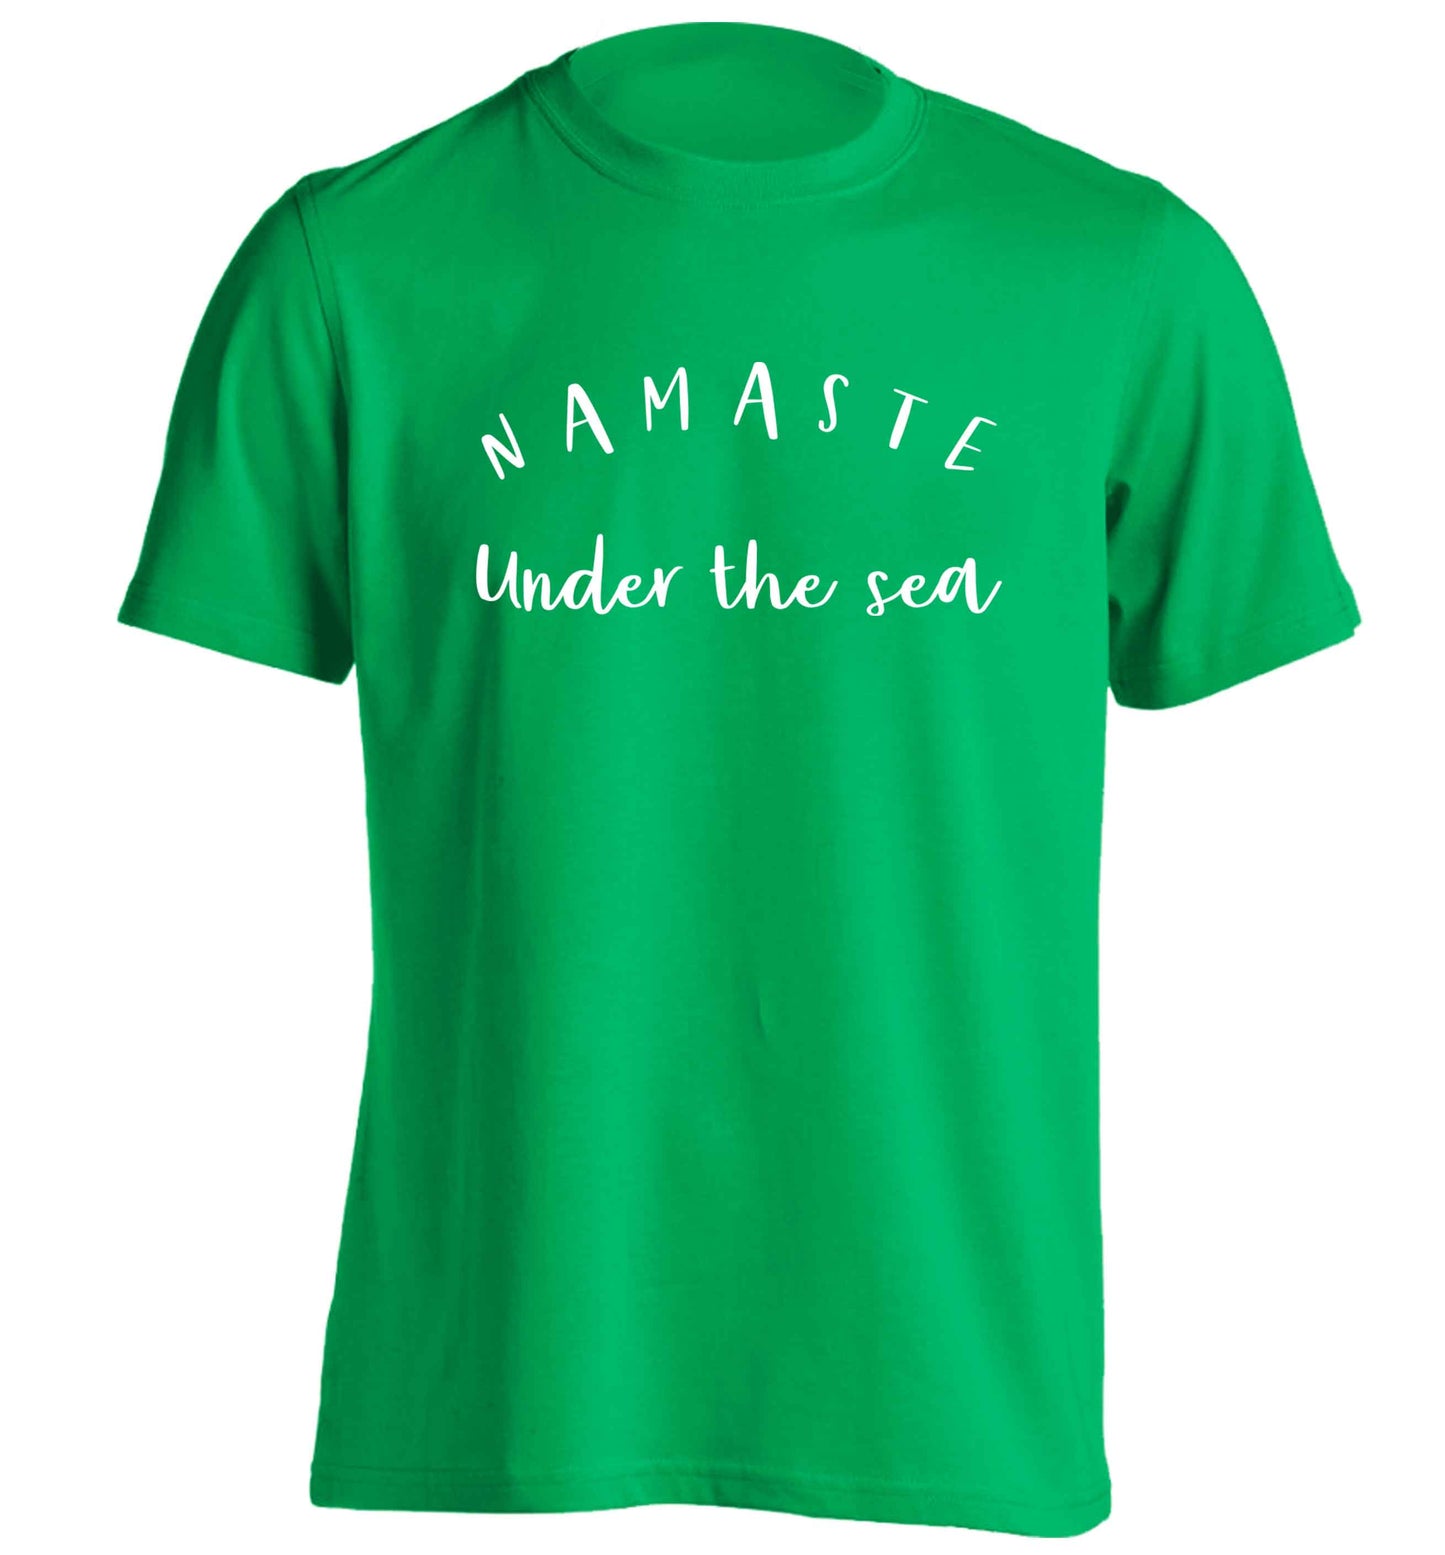 Namaste under the water adults unisex green Tshirt 2XL